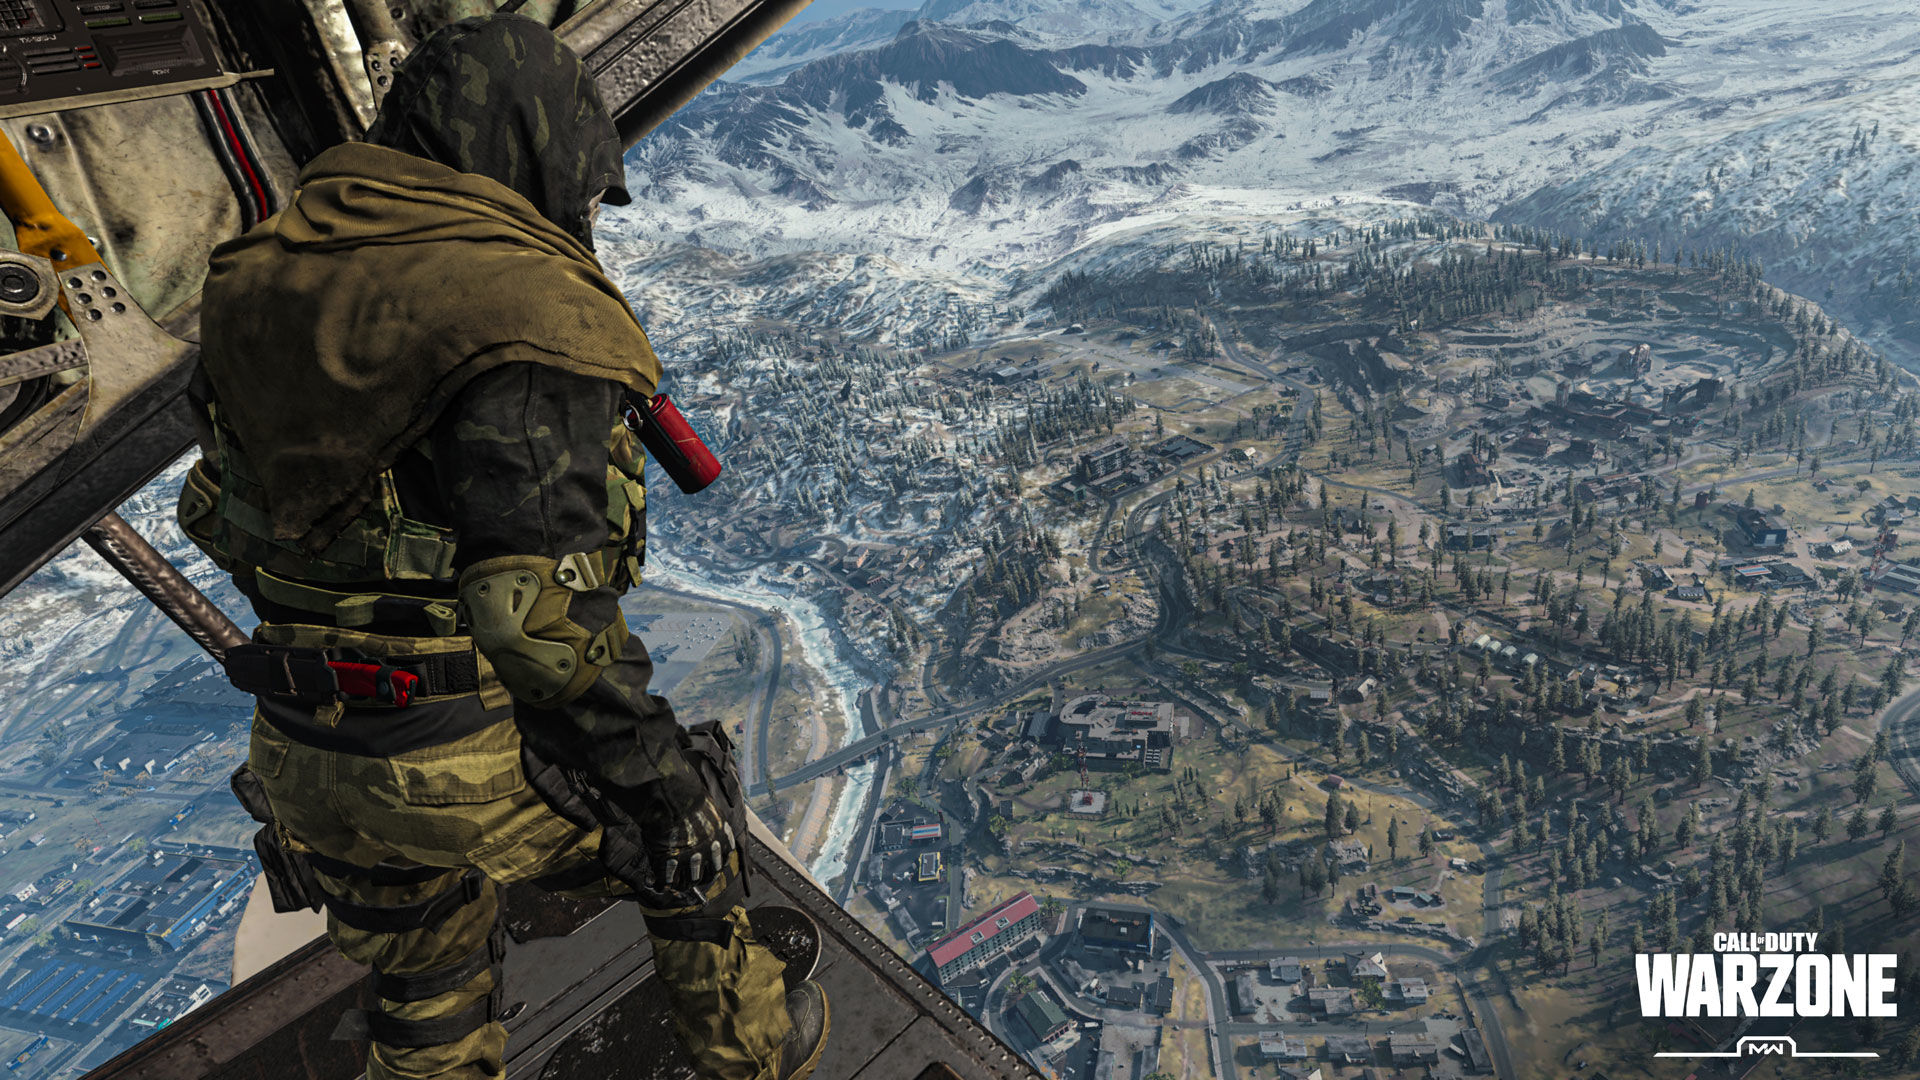 Bedava Battle Royale: Call of Duty Warzone tüm detaylar